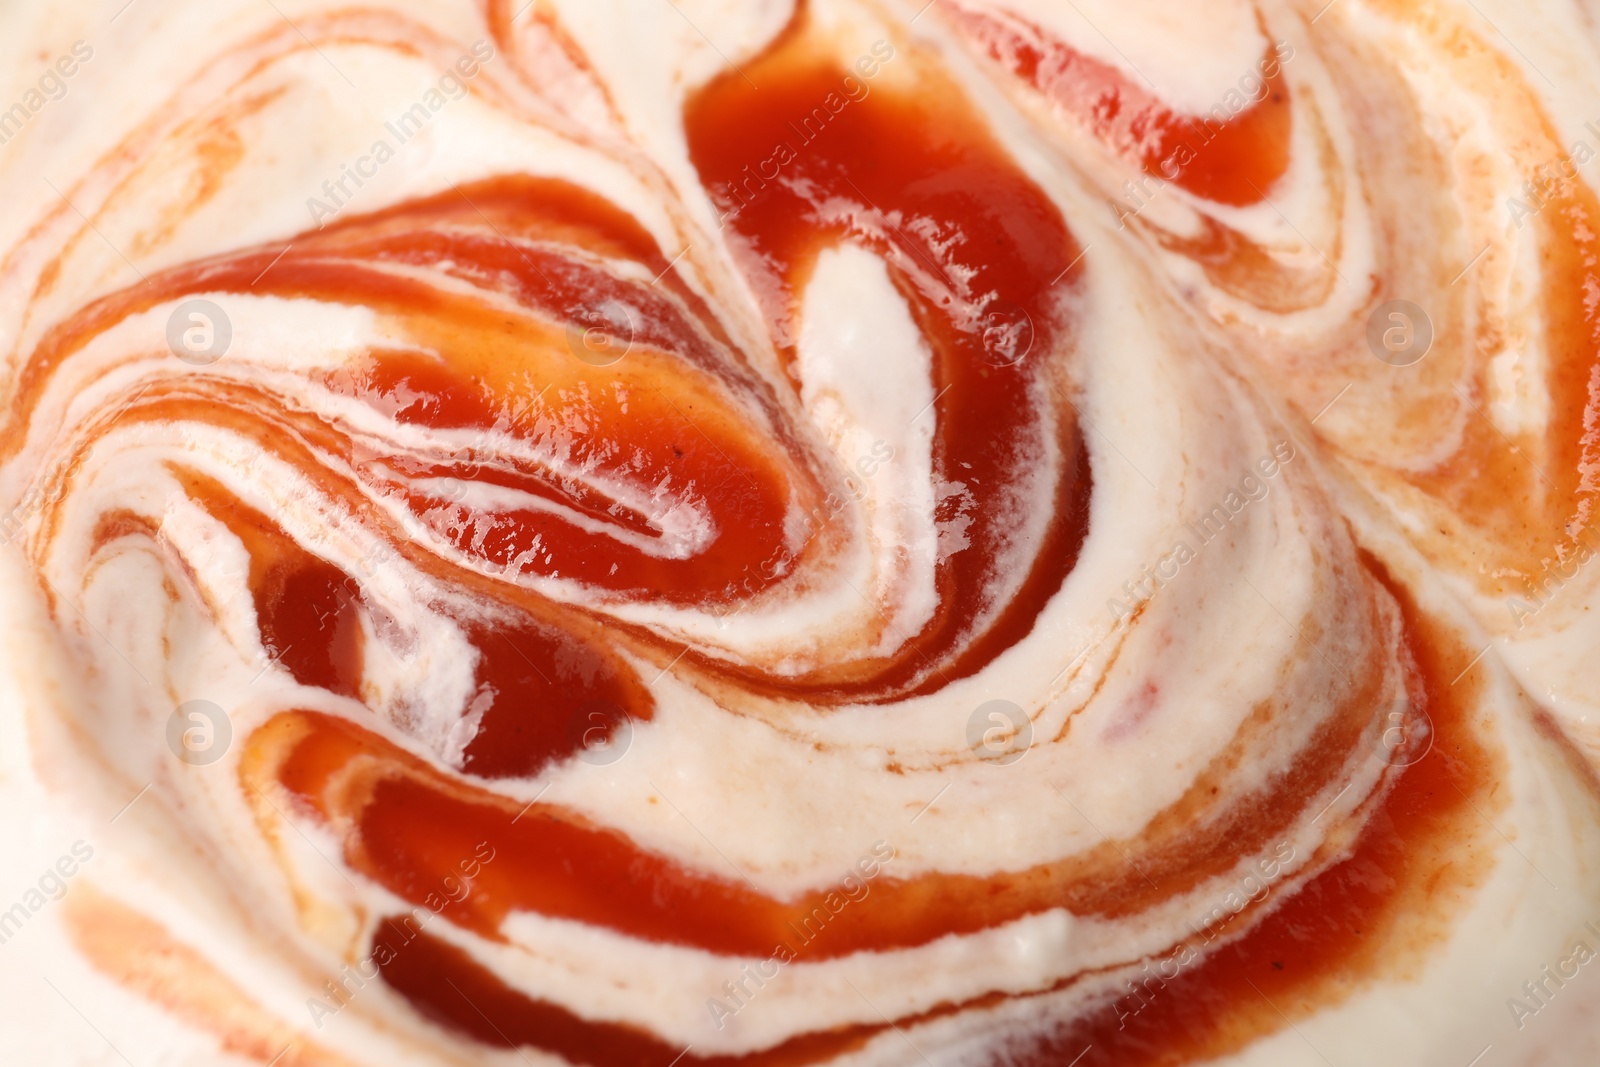 Photo of Tasty yogurt with jam as background, closeup